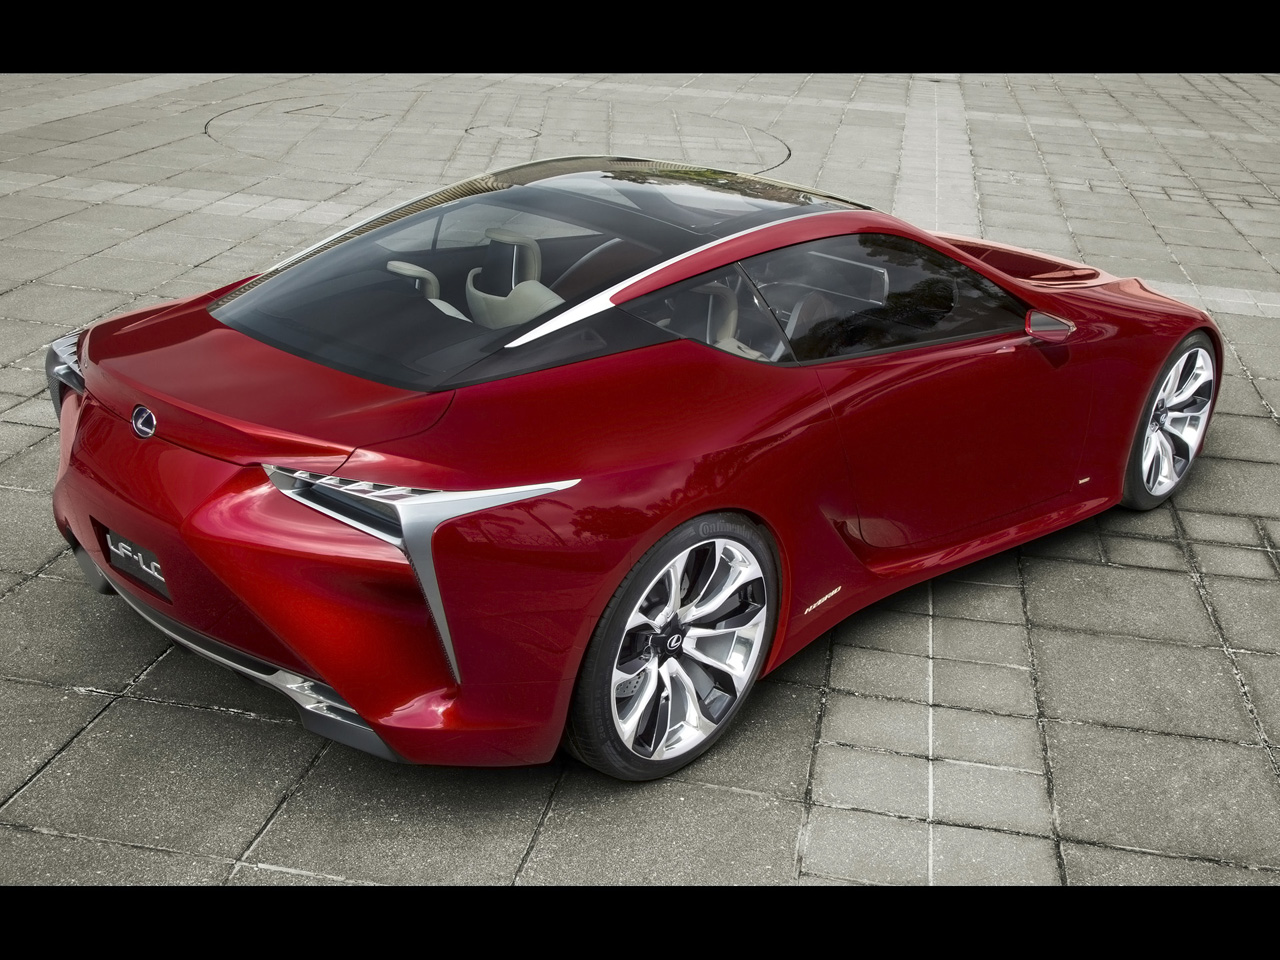 2012 Lexus LF-LC Hybrid Concept